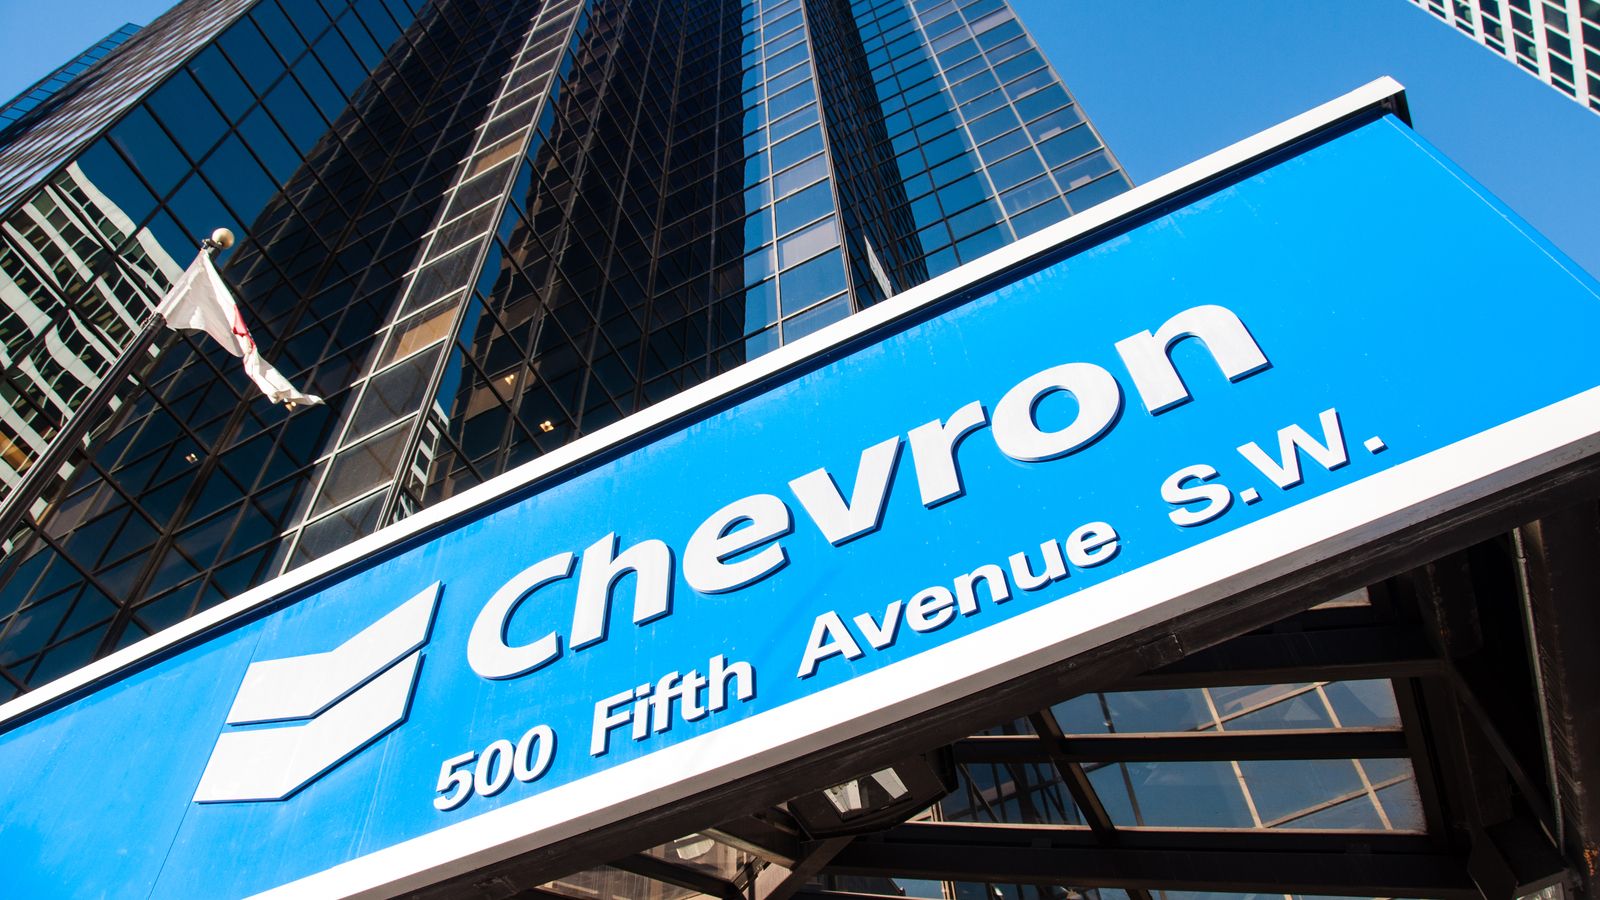 CVX Stock. Chevron logo on blue sign in front of skyscraper building